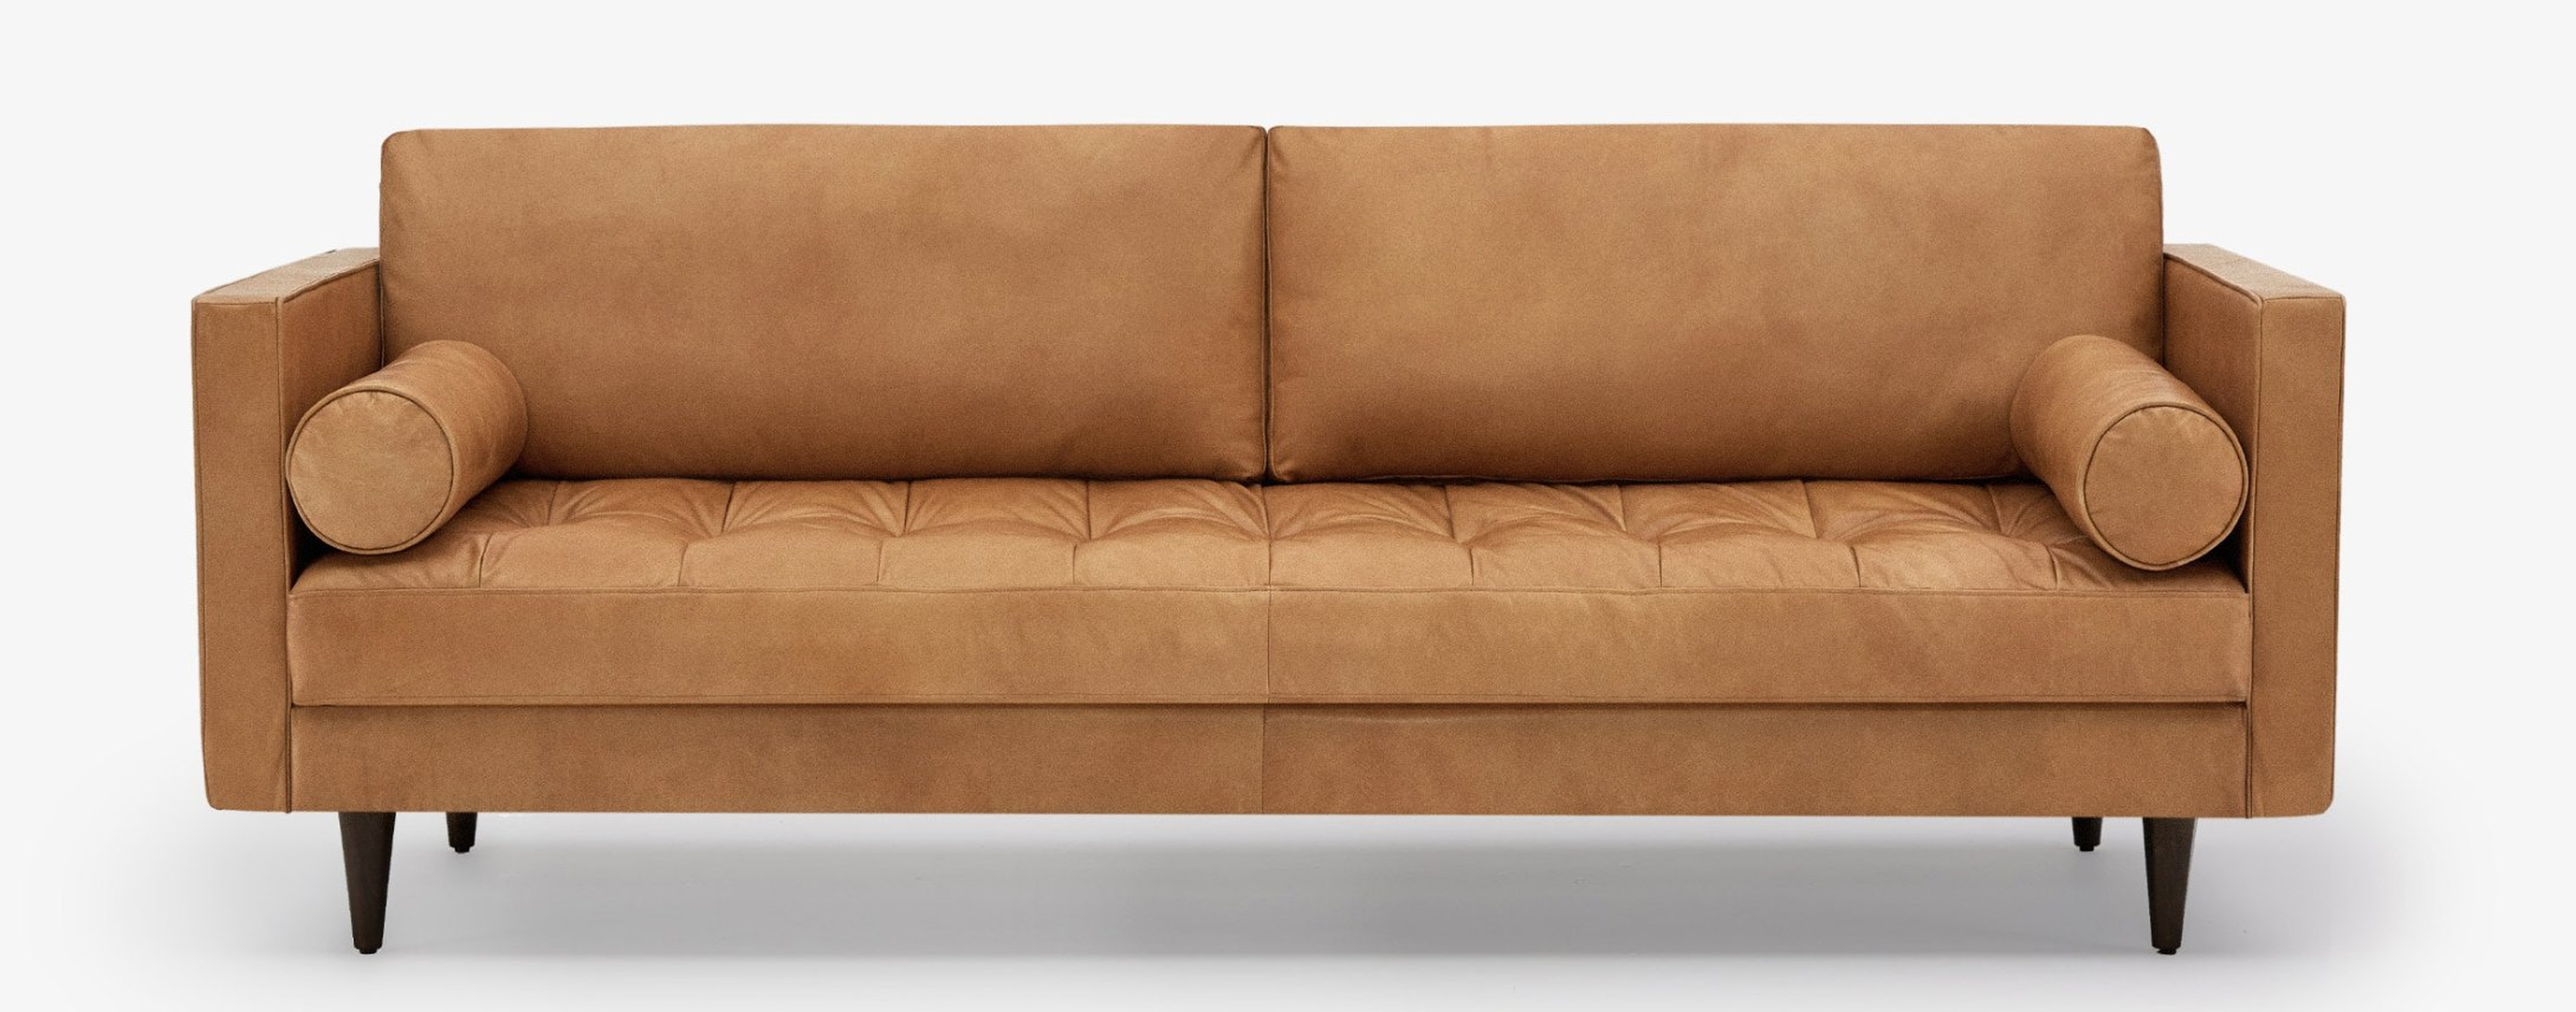 Briar Leather Sofa in Santiago Caramel Leather with Mocha Wood Stain - Joybird